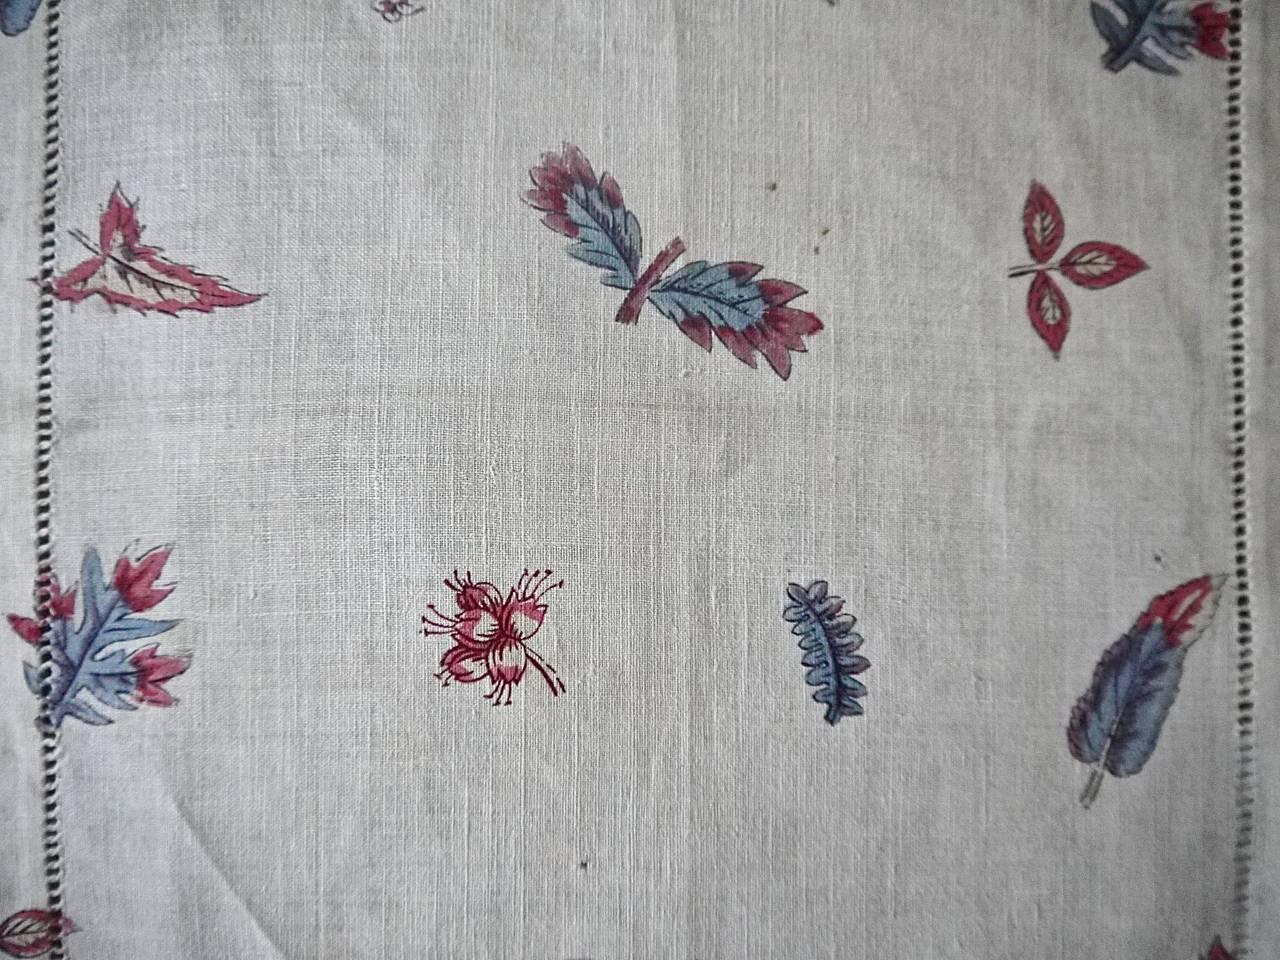 18th century handkerchief